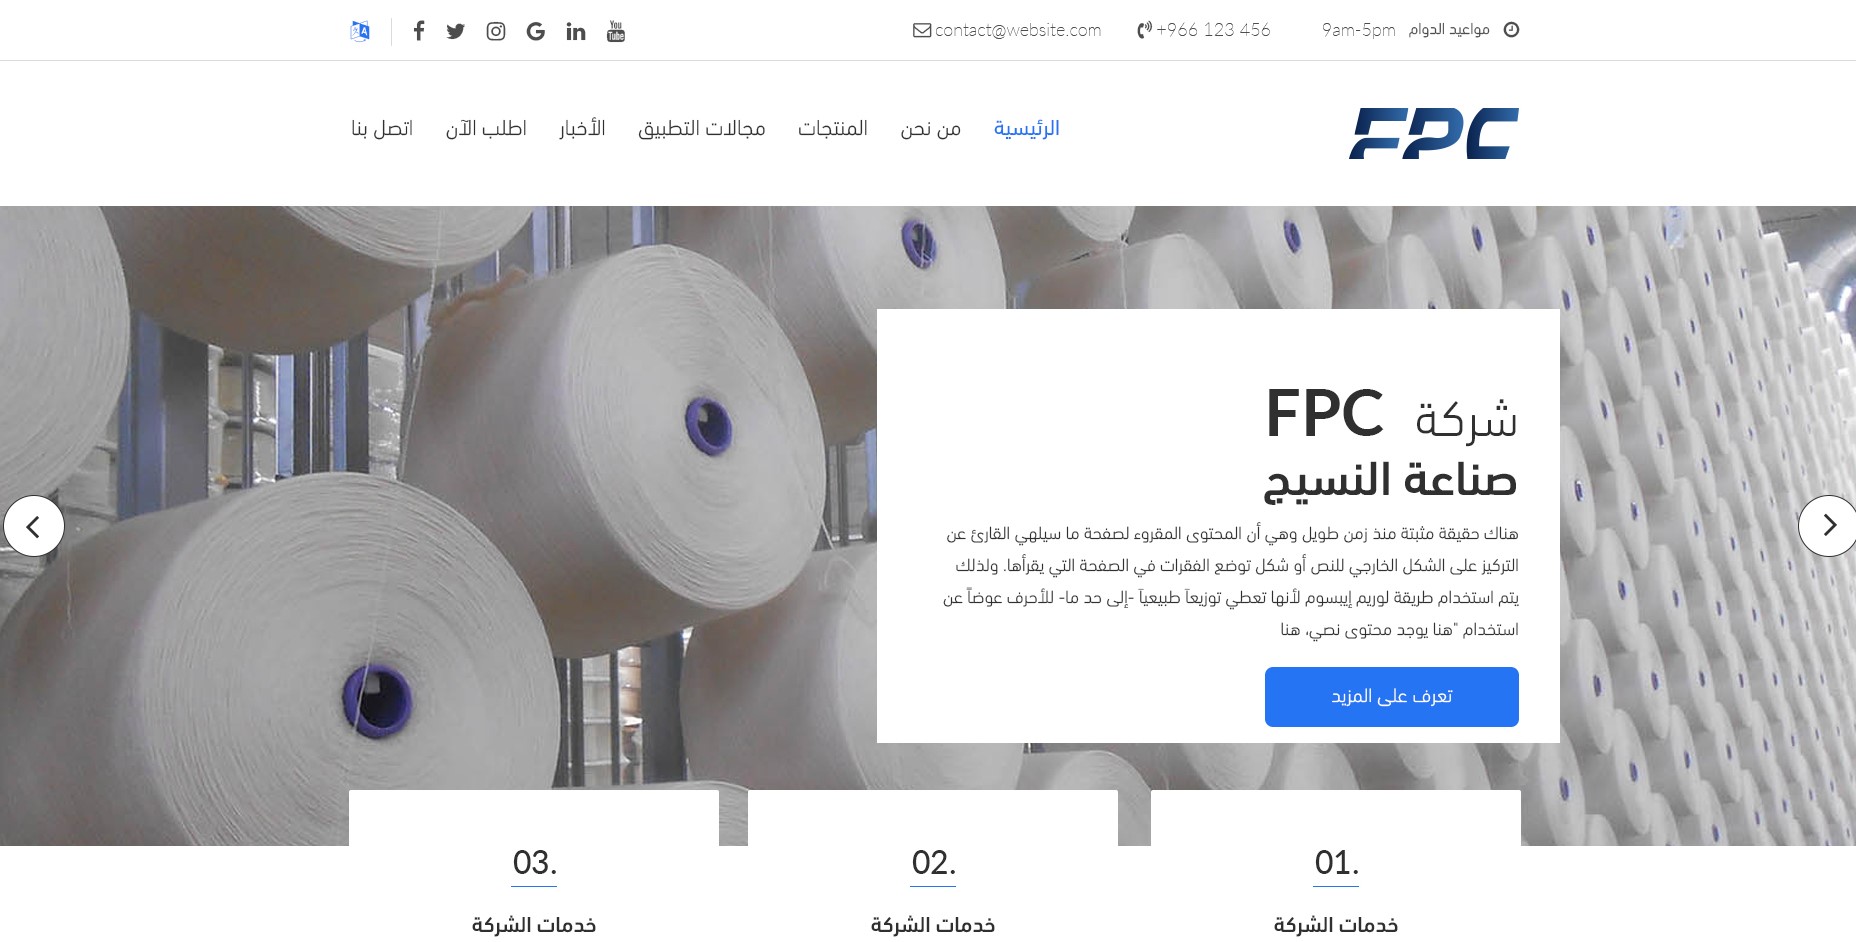  FPC website